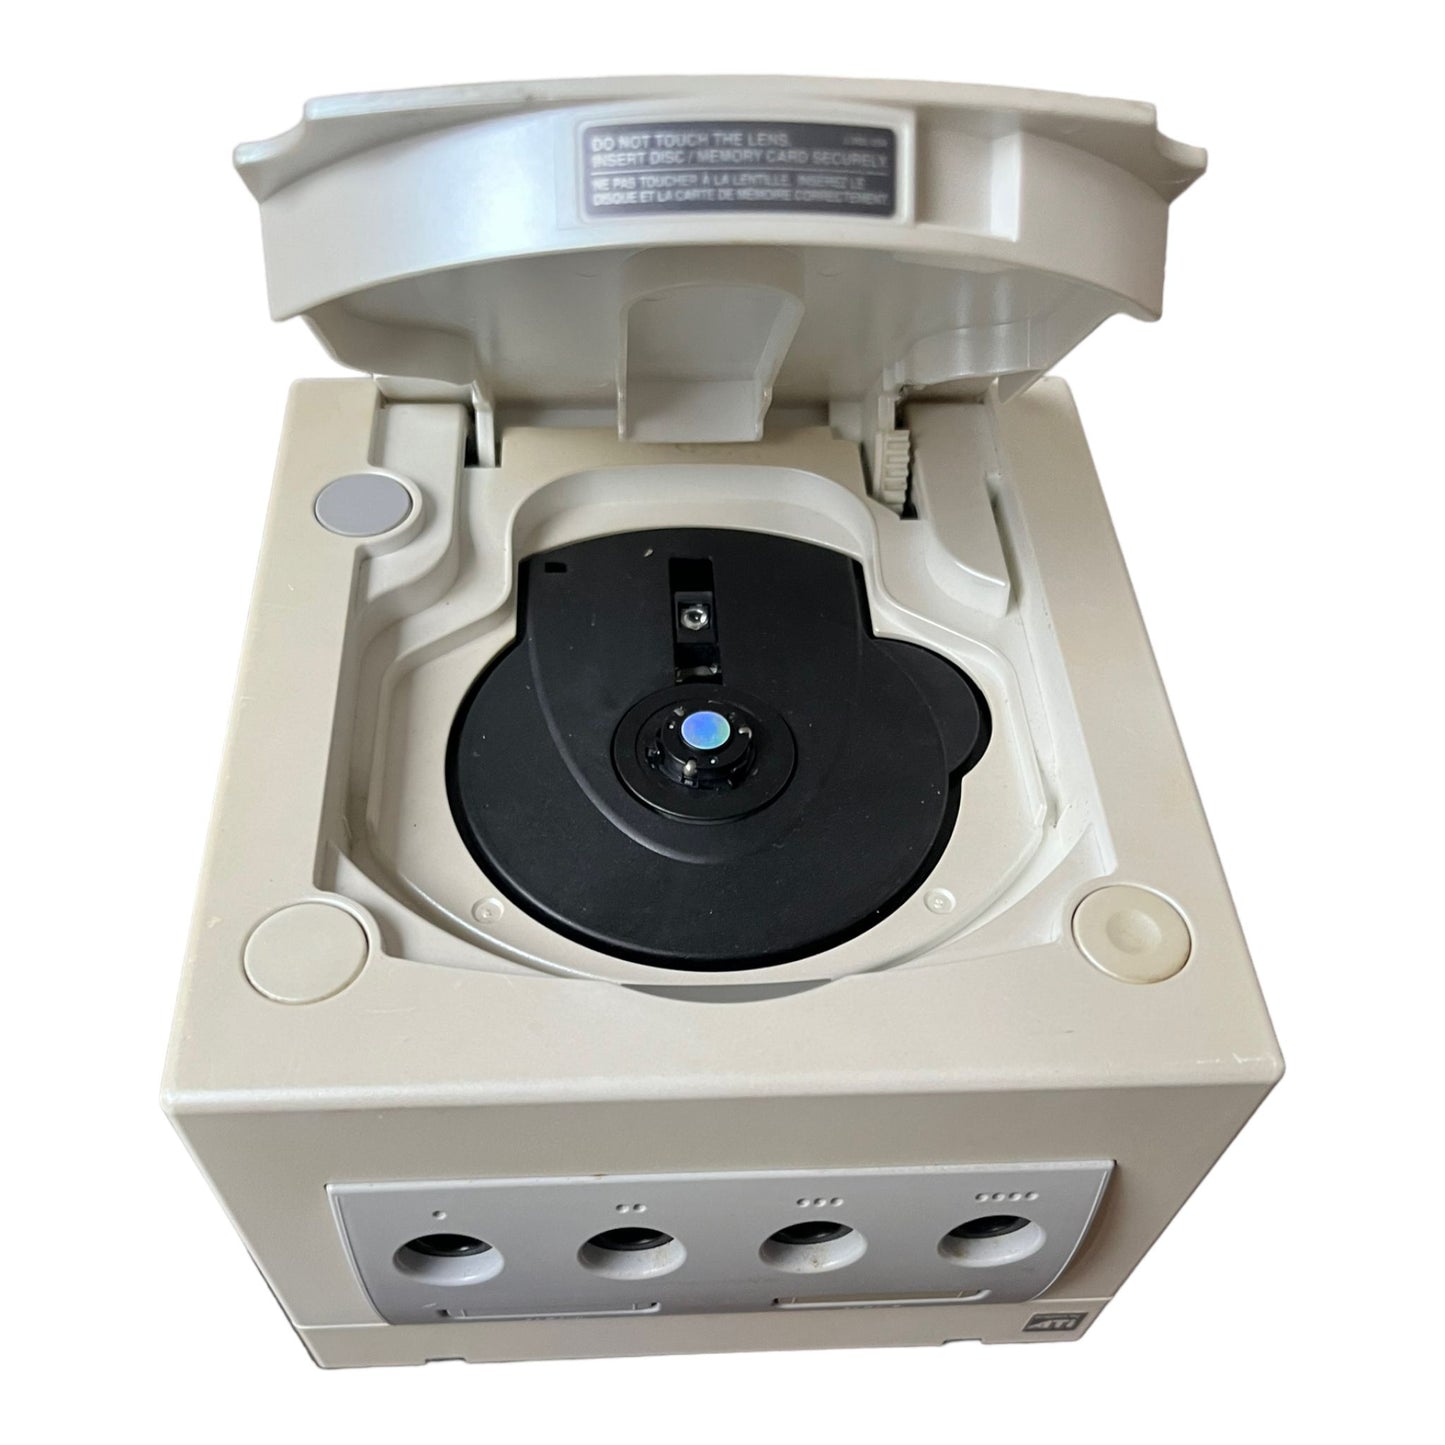 GameCube Console White + Super Mario Sunshine